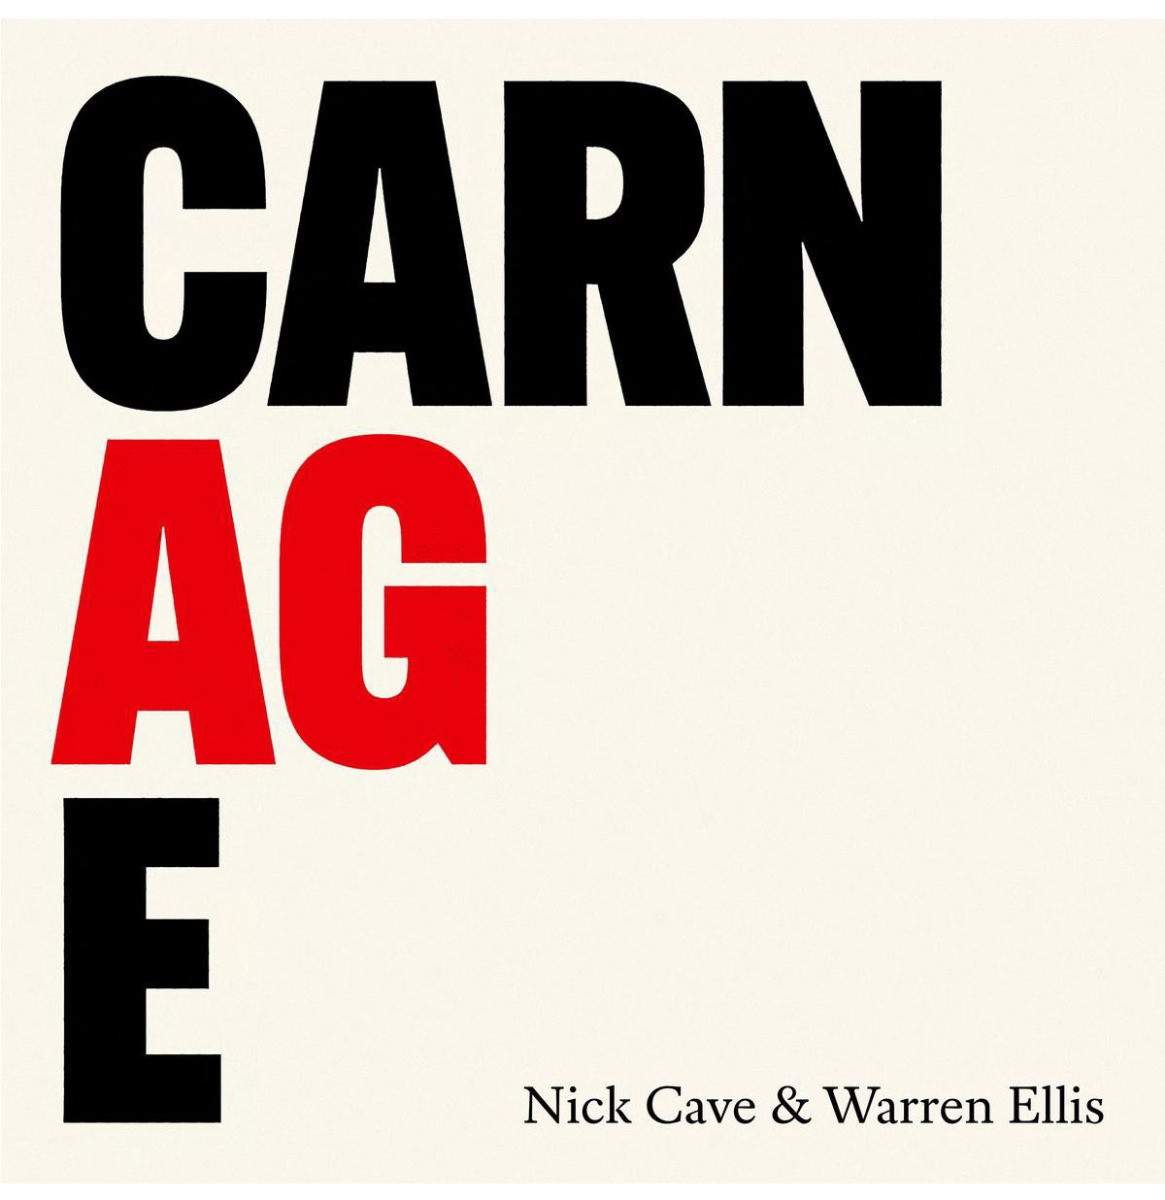 Nick Cave & Warren Ellis - Carnage LP